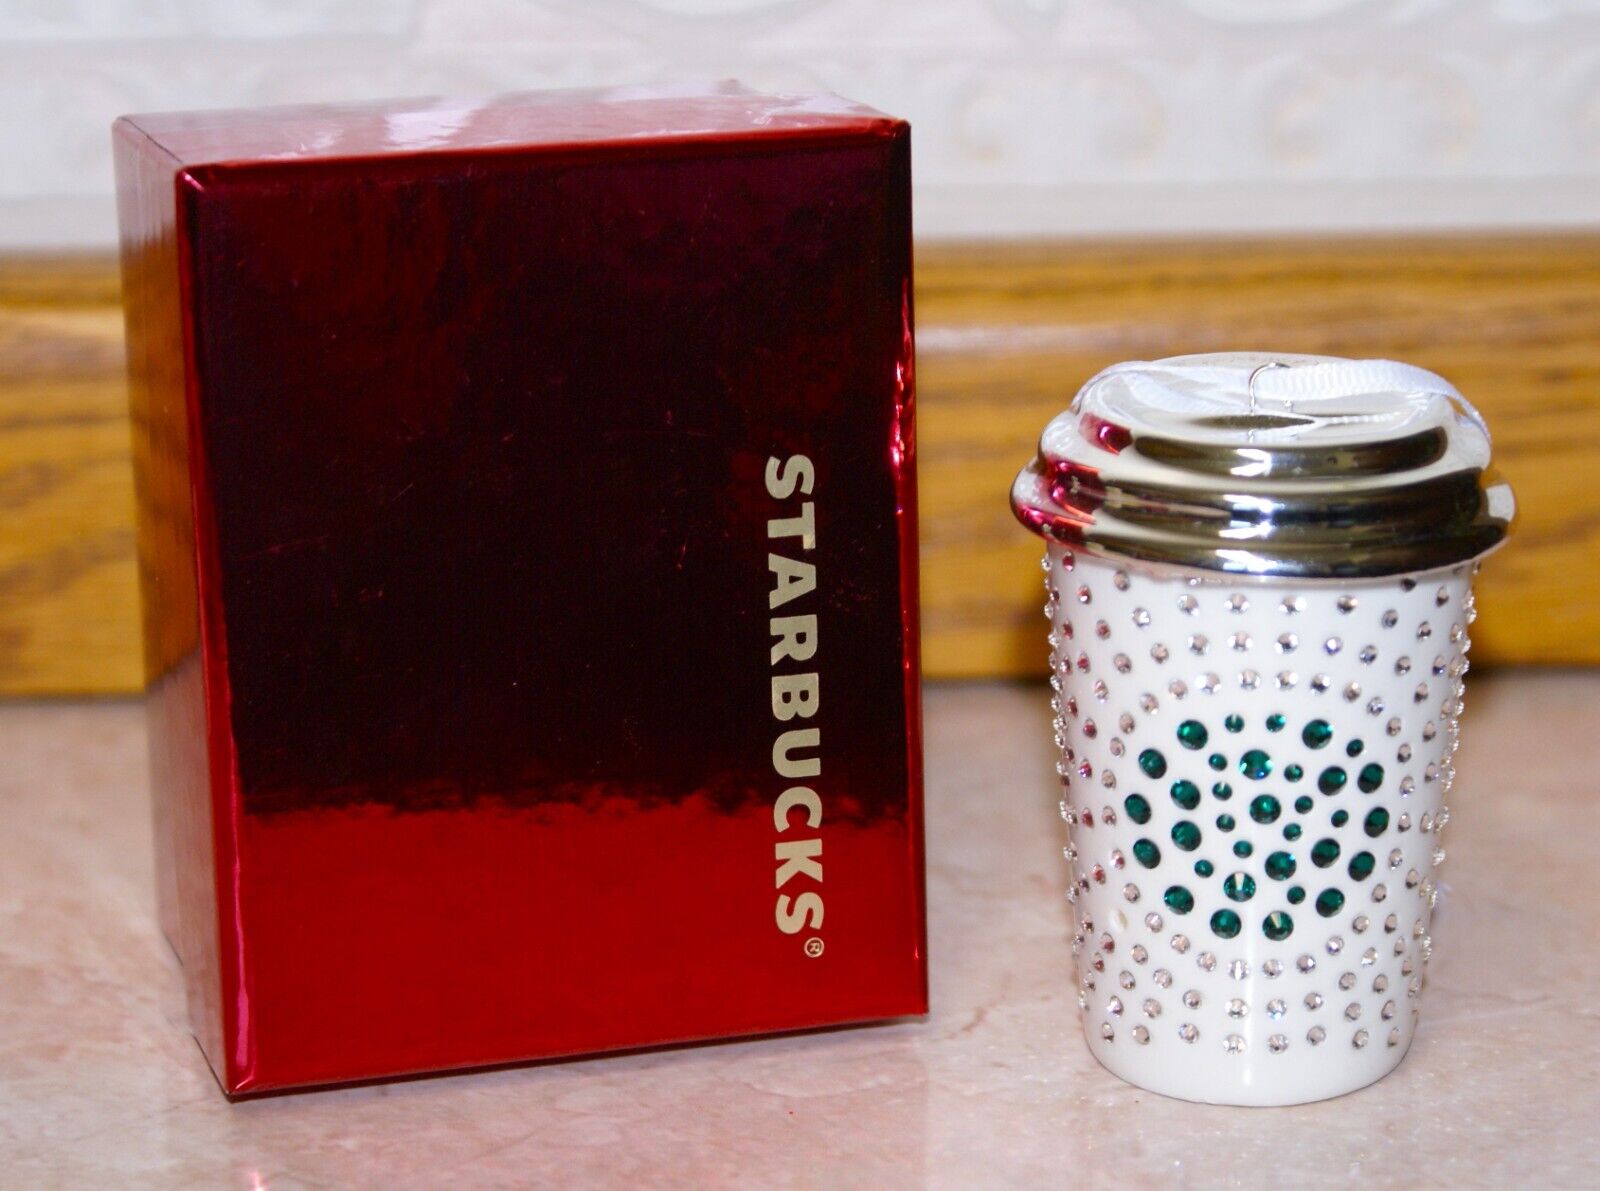 2014 Starbucks Swarovski Crystal Ceramic Ornament, Coffee Cup Limited Edition